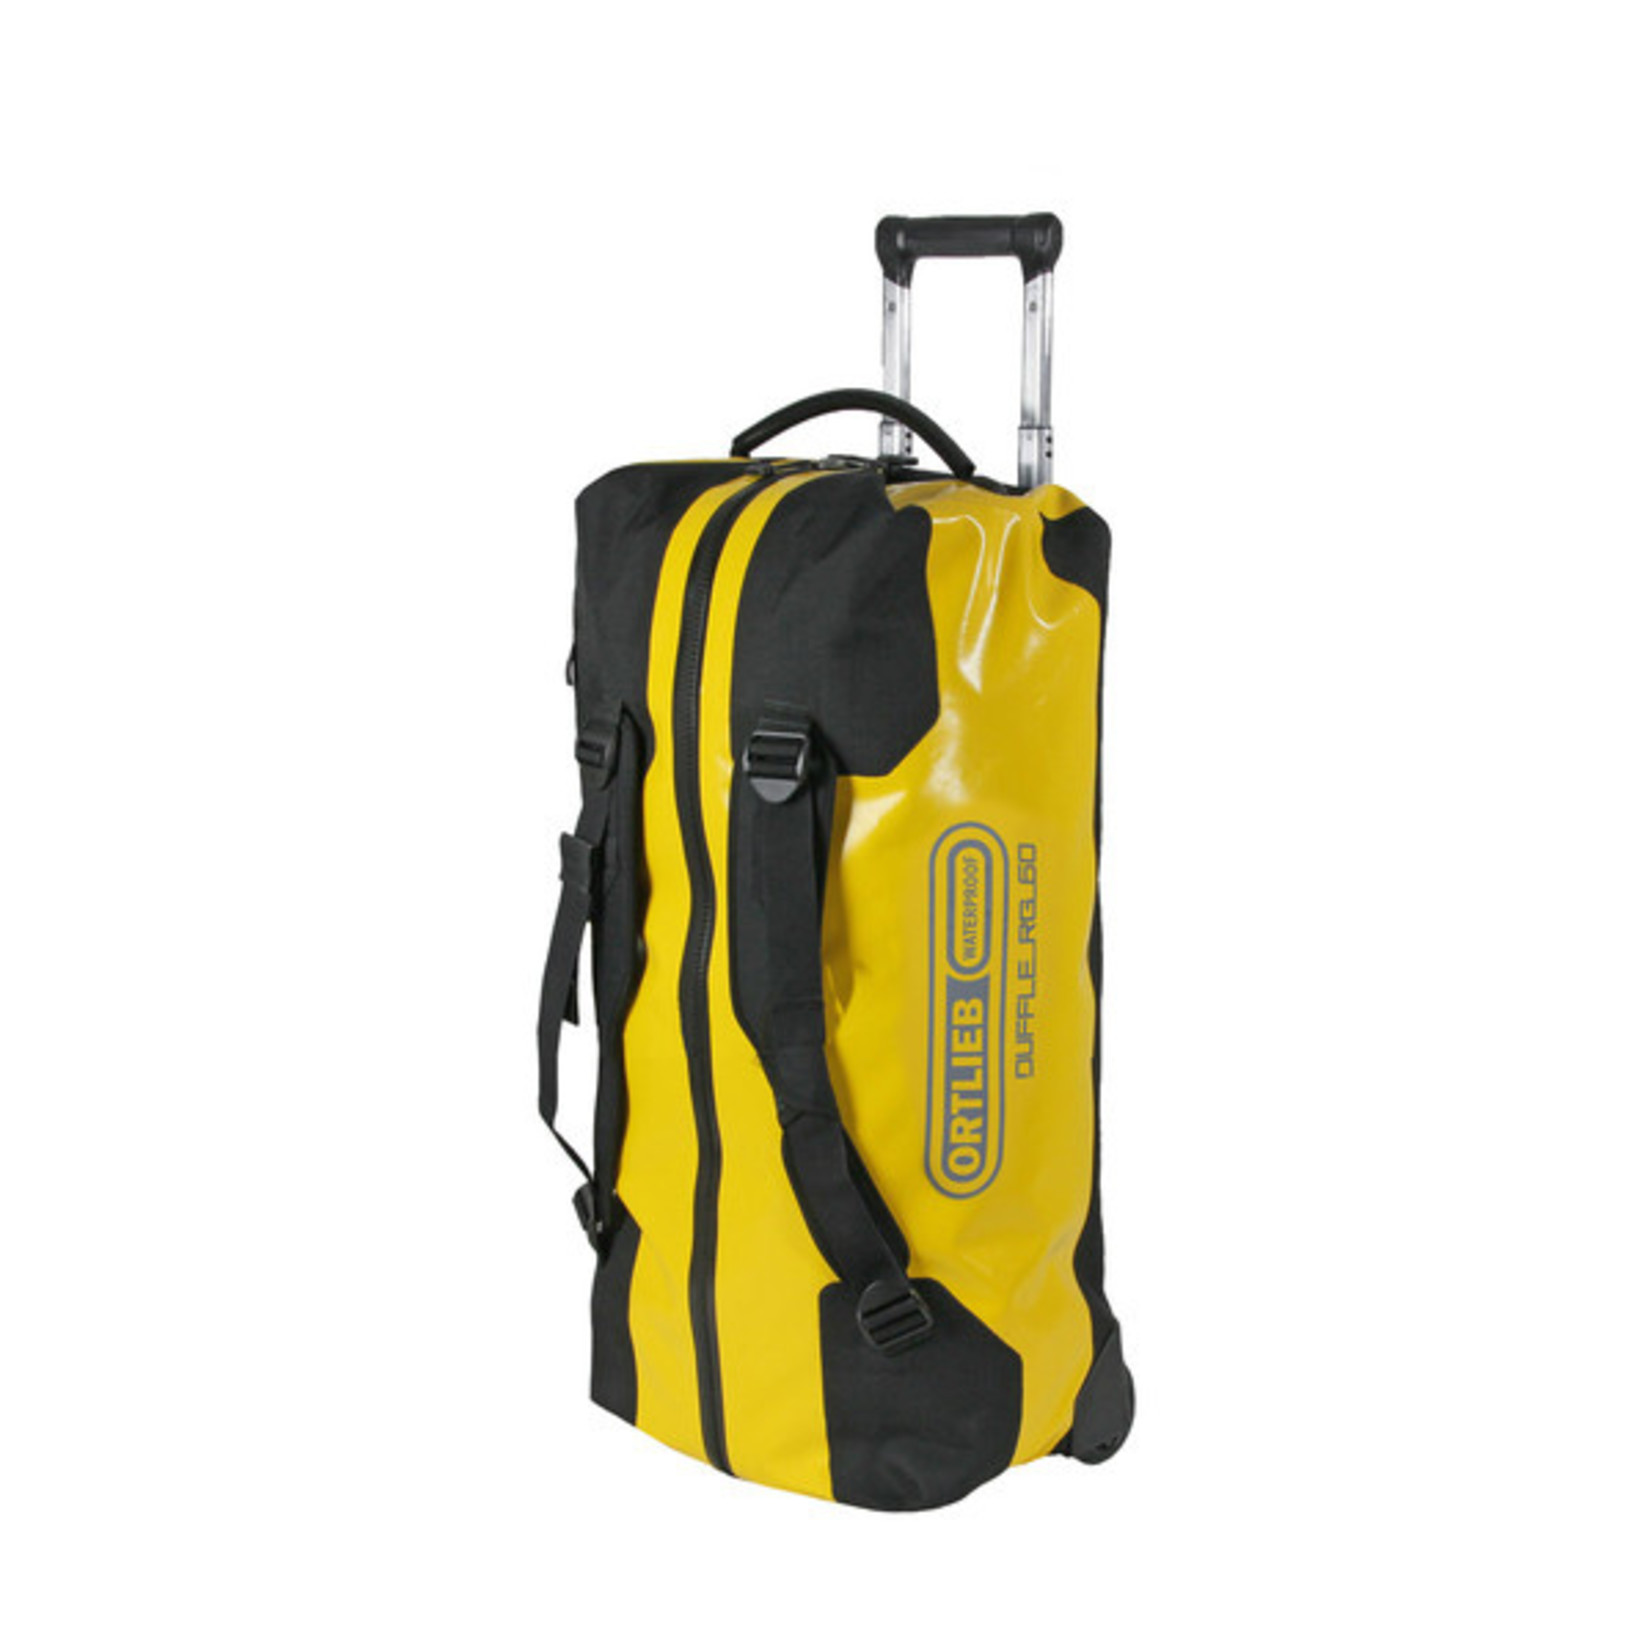 Ortlieb Ortlieb Duffle RG Bag (With Telescopic Handle) K12102 - 60L Sunyellow-Black